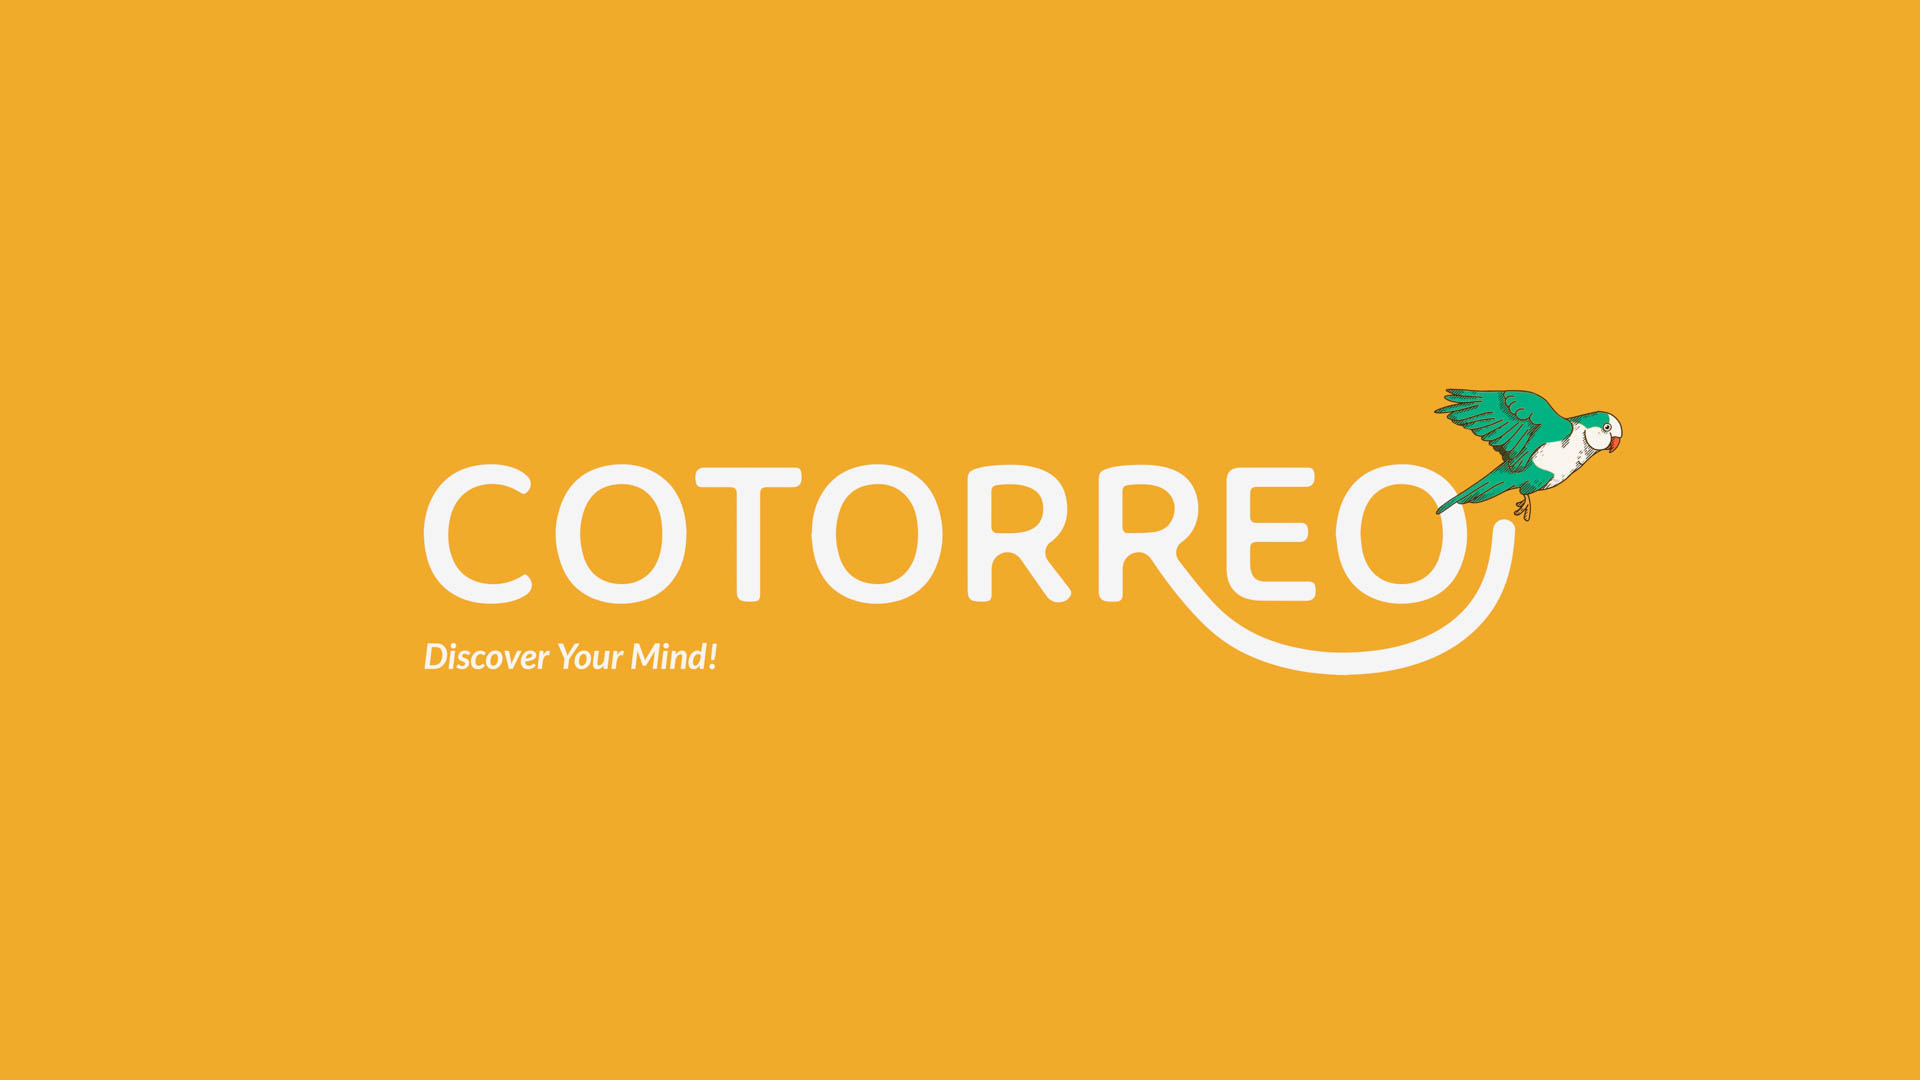 Cotorreo app logo design with orange background